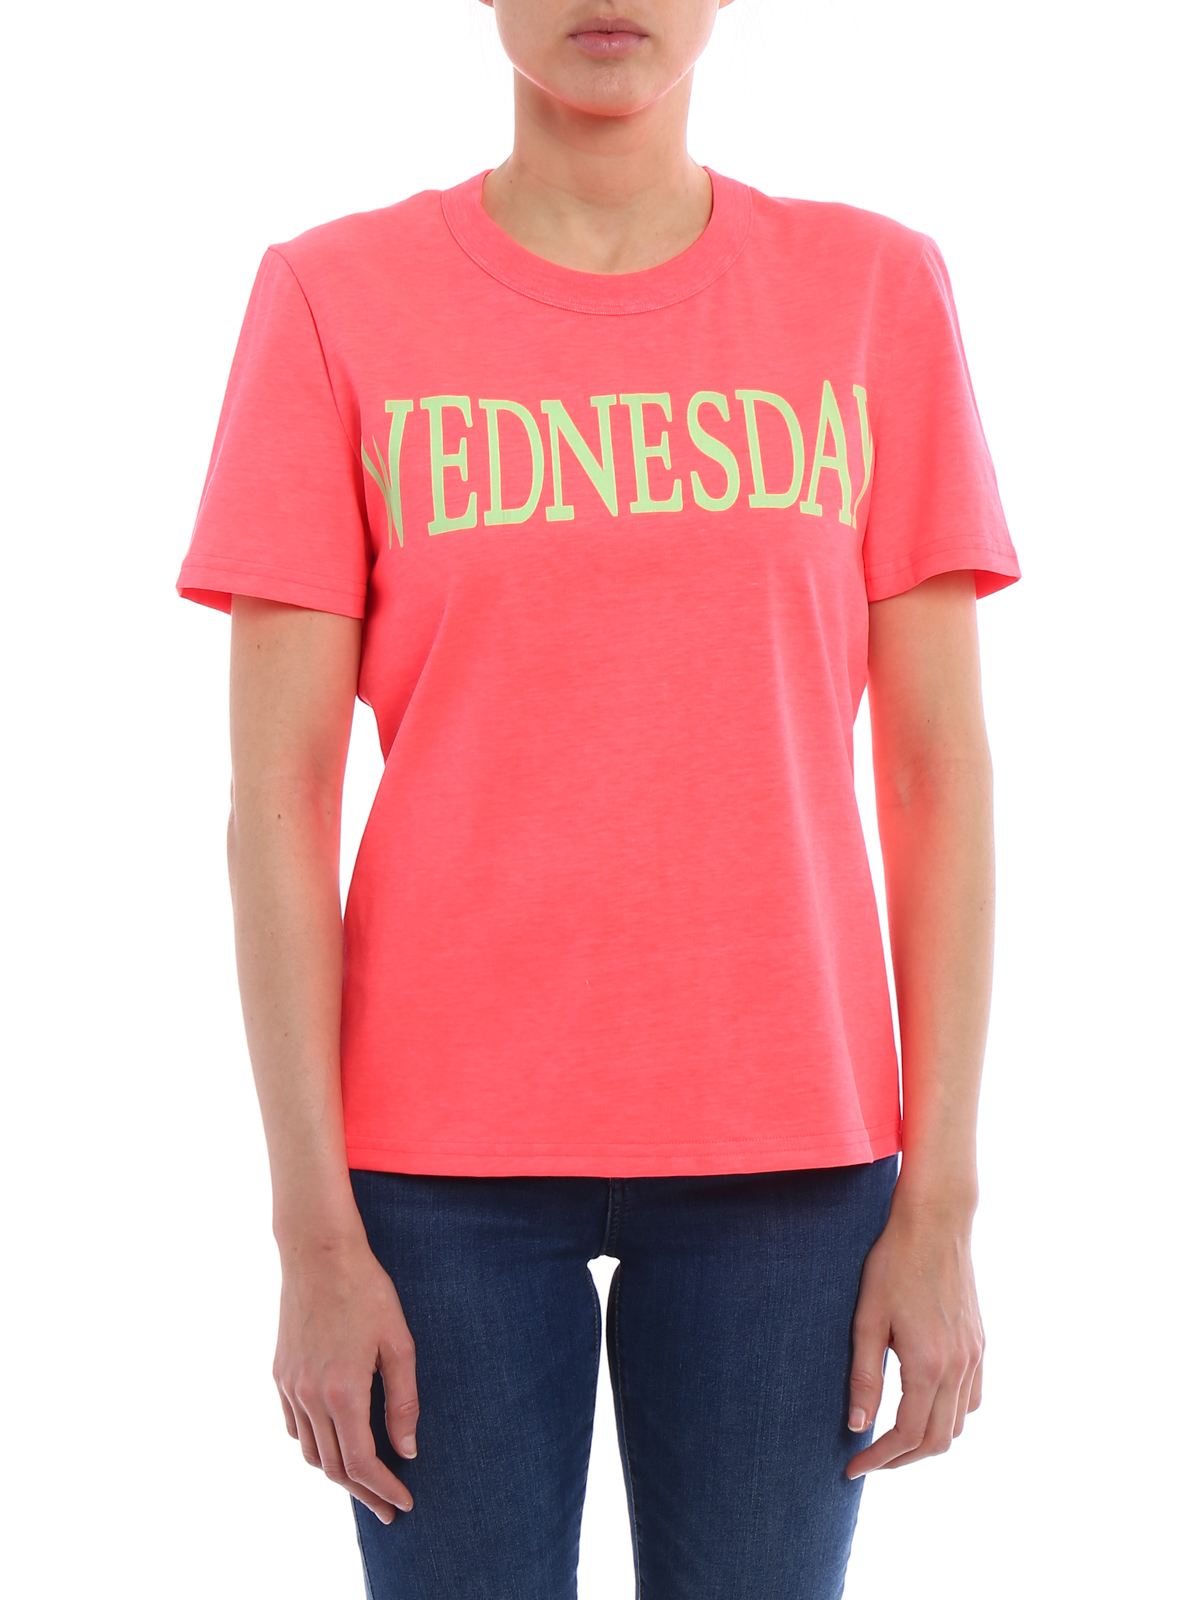 Klassificer ild hensynsfuld T-shirts Alberta Ferretti - Rainbow Week Wednesday fluo Tee - V070116900129